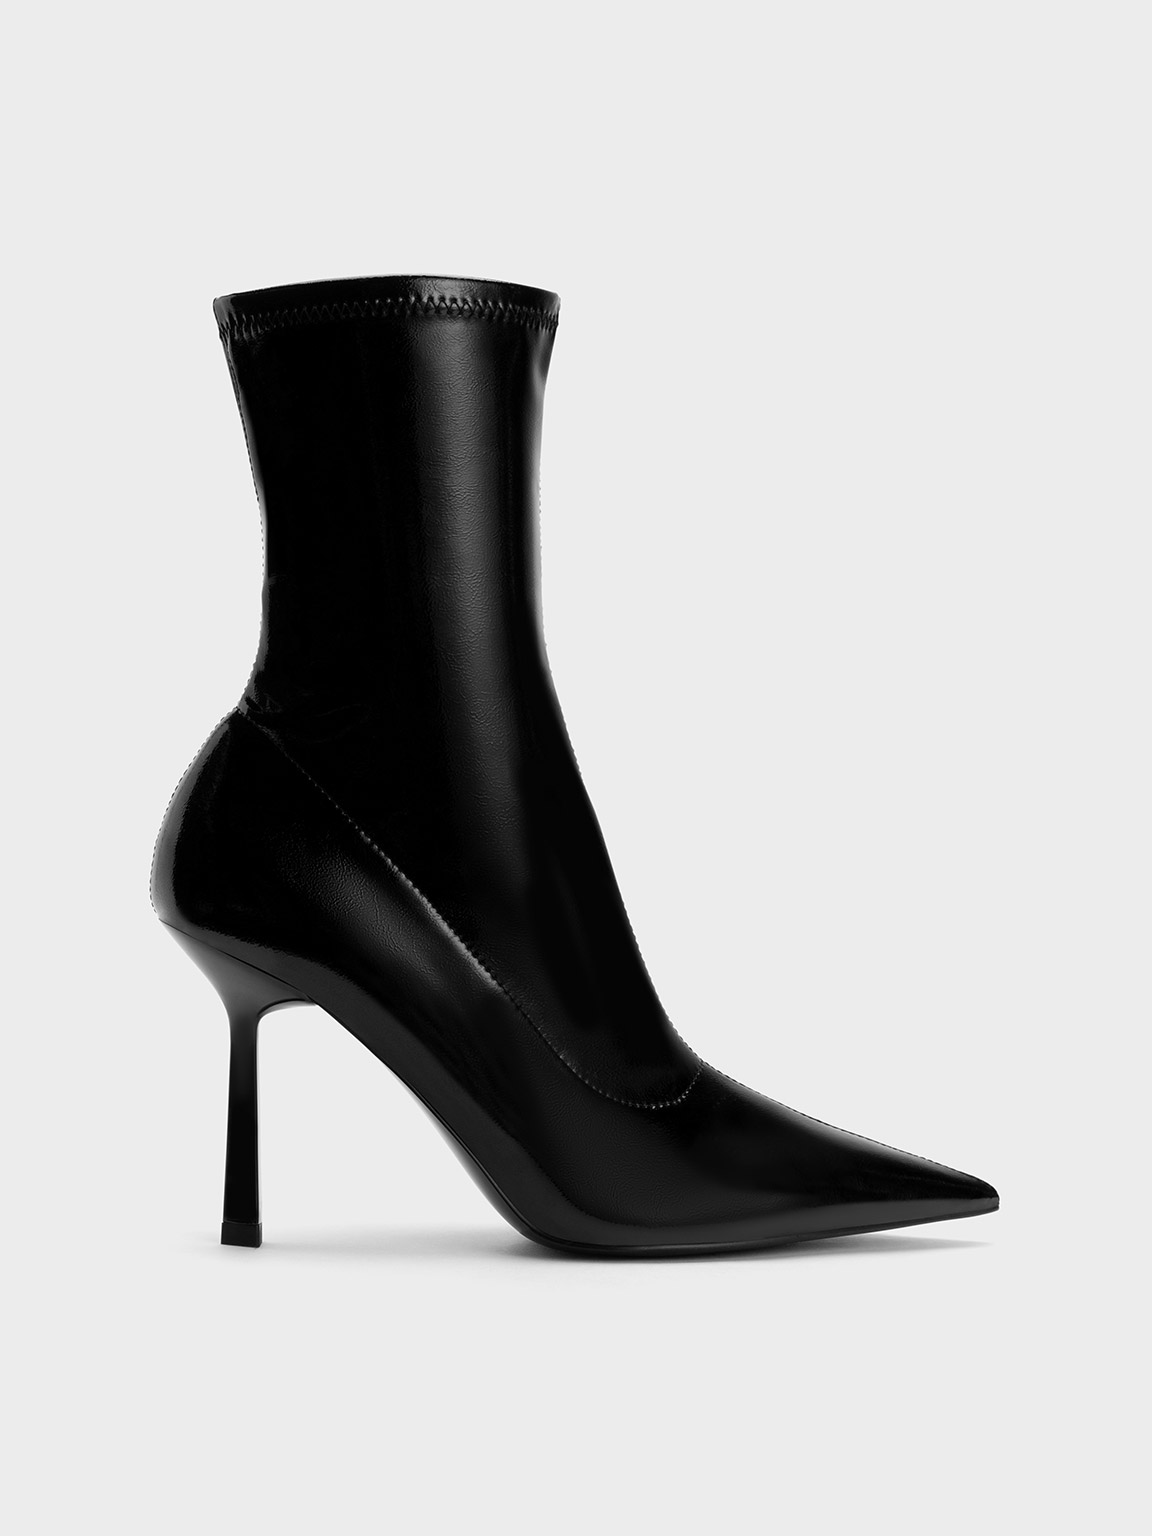 Kenzie Black Patent Pointed Toe Block Heel Ankle Boots | Public Desire